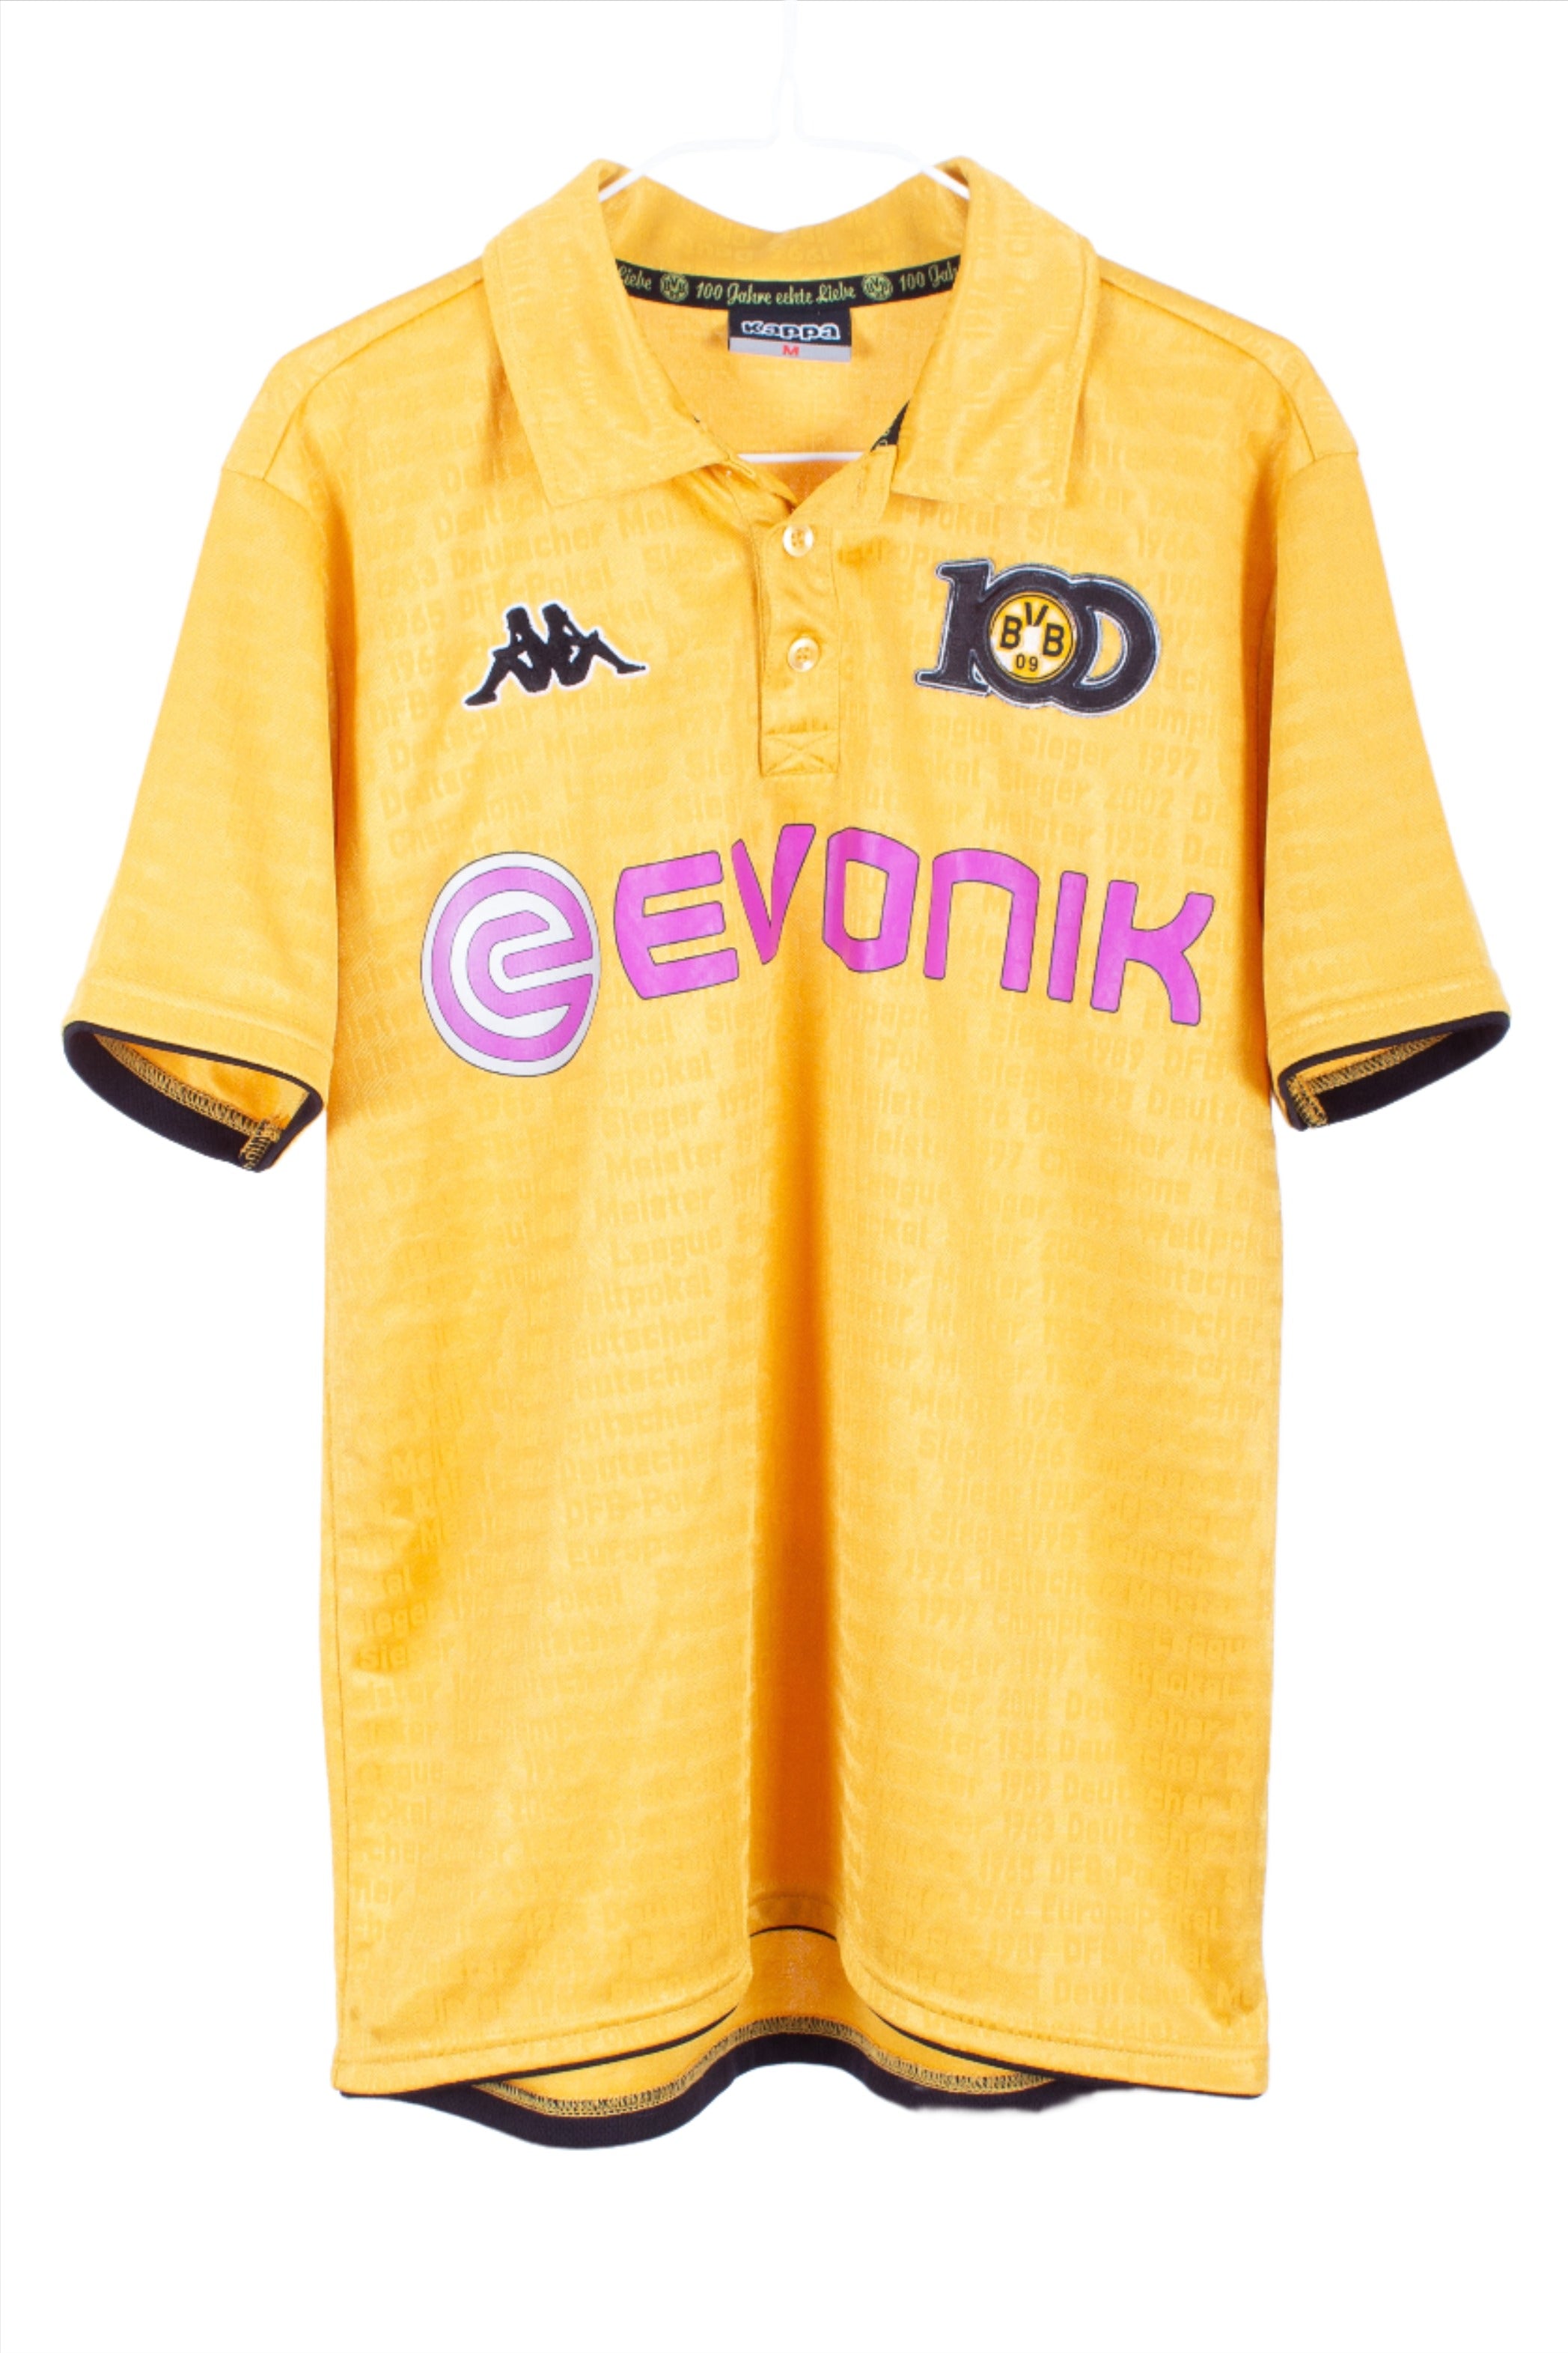 Borussia Dortmund 2009/10 100yr Anniversary Shirt (M)